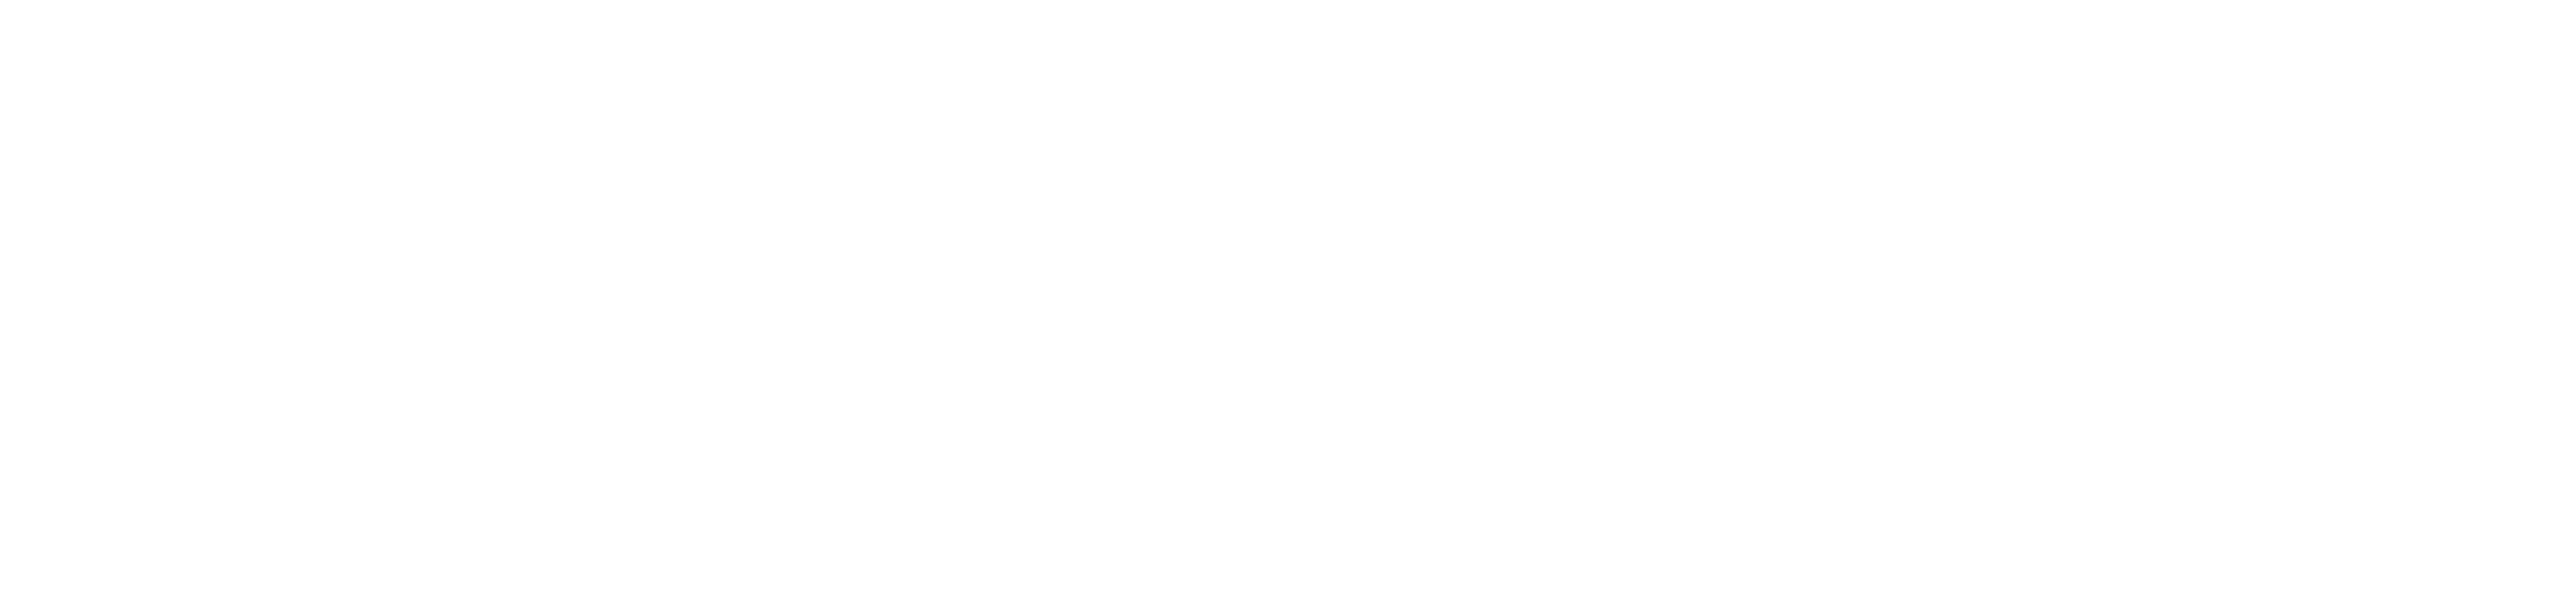 Social Library Logo - Icon White